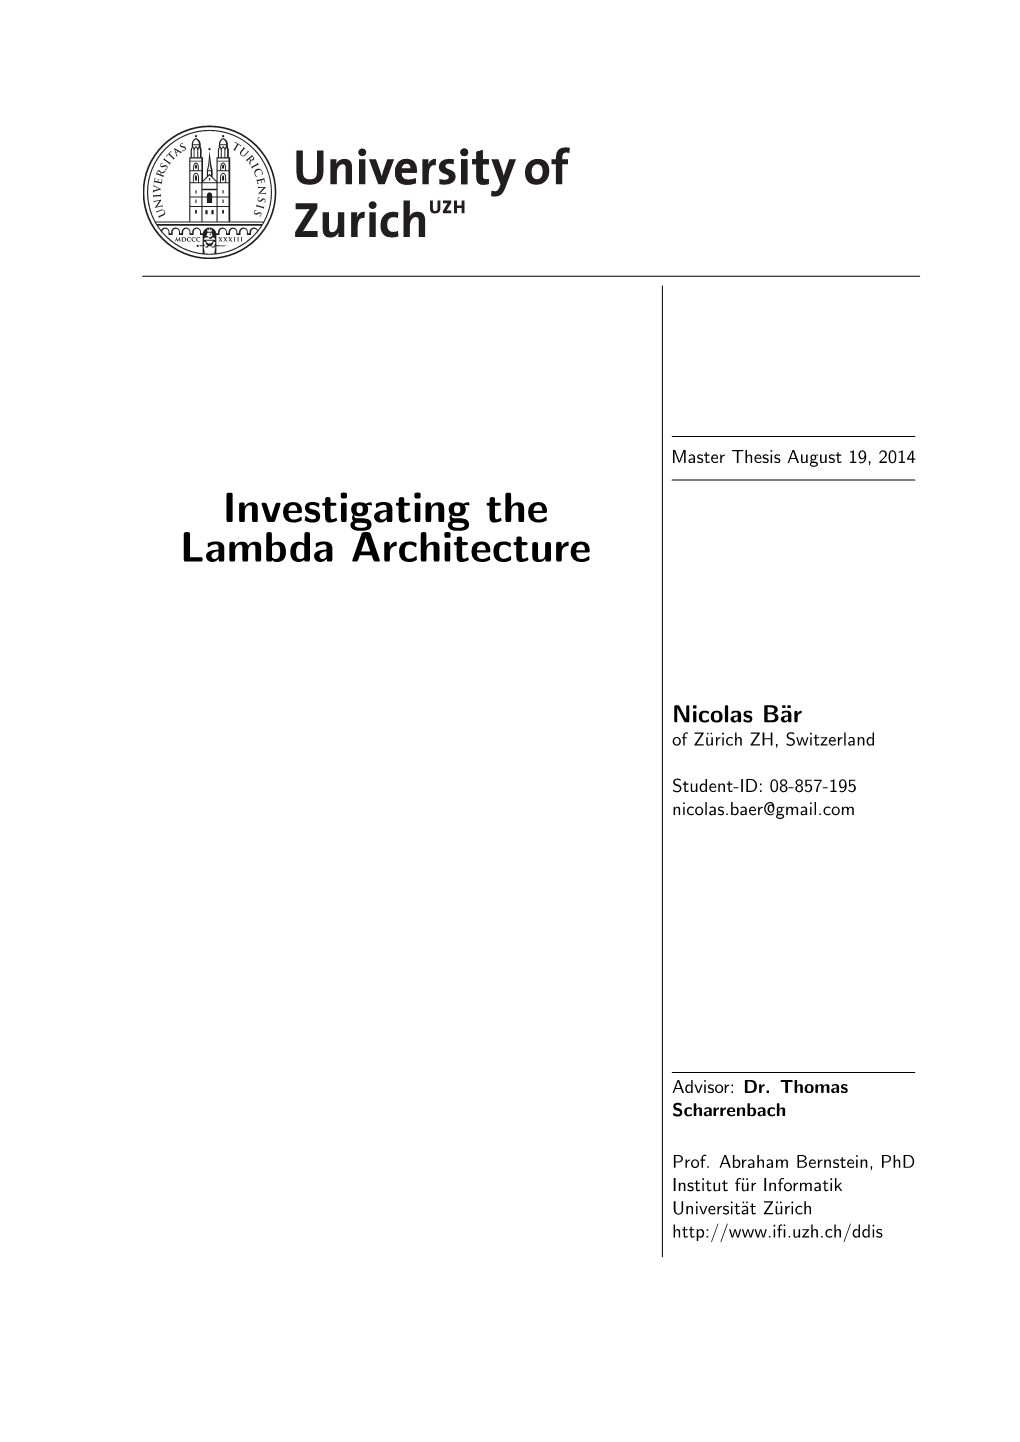 Investigating the Lambda Architecture